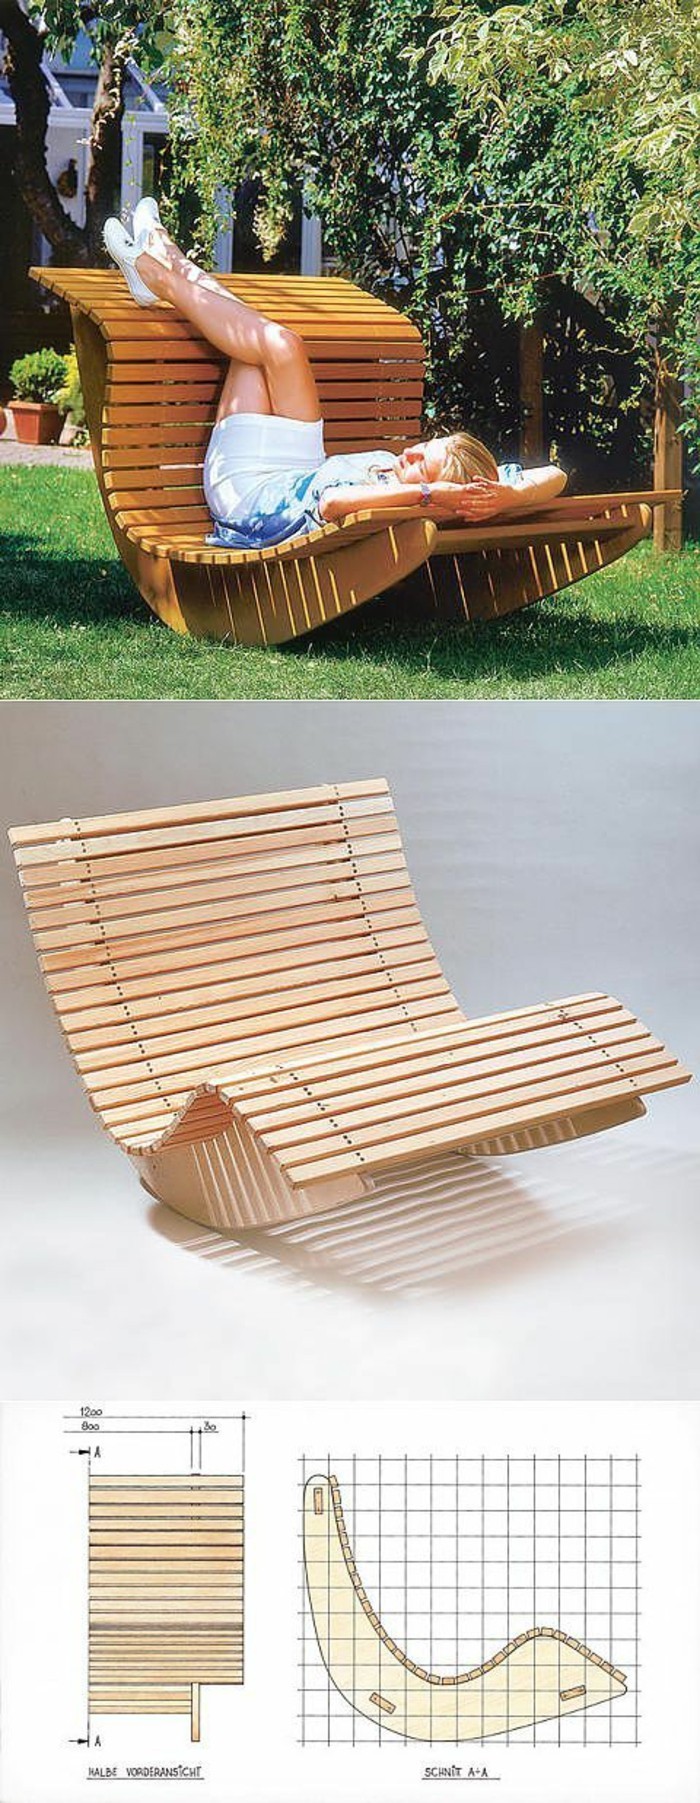 DIY-Moebel-עשה-זאת-בעצמך Moebel-כיסא-build-מ-עץ-בעצמך